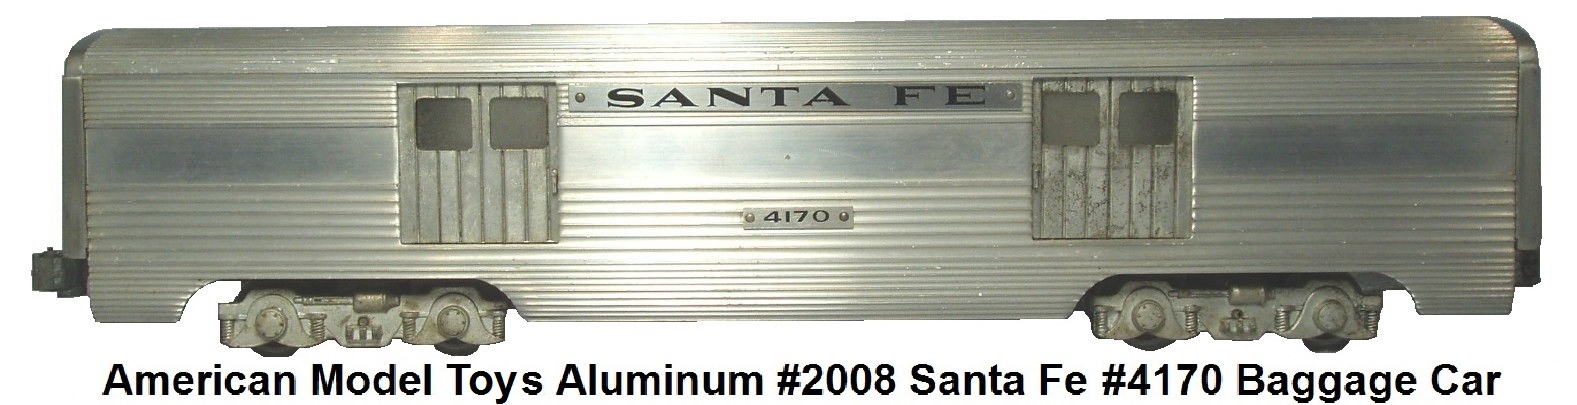 AMT American Model Toys extruded aluminum #2008 Santa Fe 4170 Baggage Car in 'O' gauge circa 1949-50